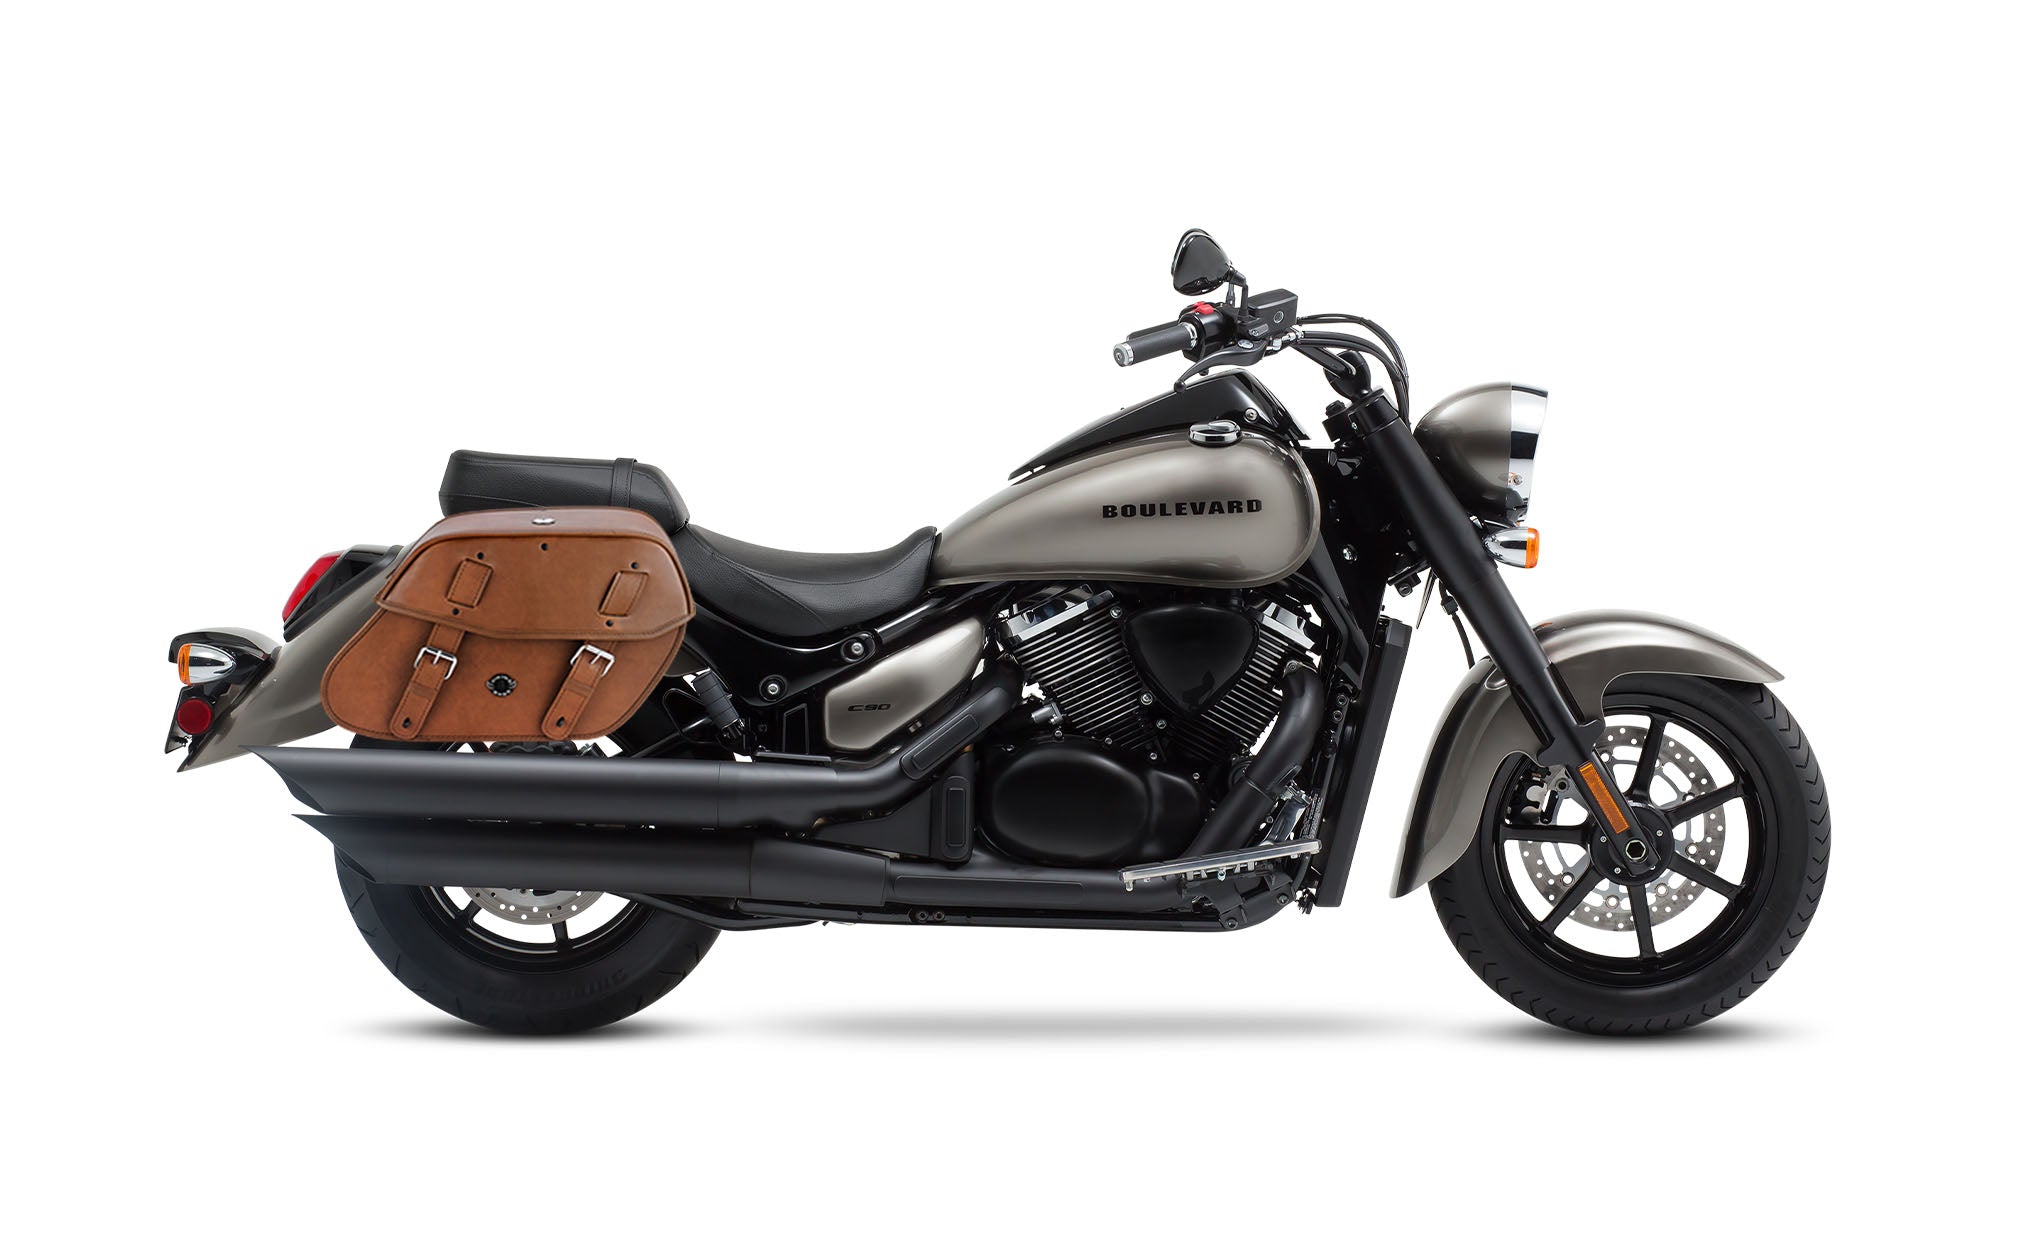 Viking Odin Brown Large Suzuki Boulevard C90 Vl1500 Leather Motorcycle Saddlebags on Bike Photo @expand